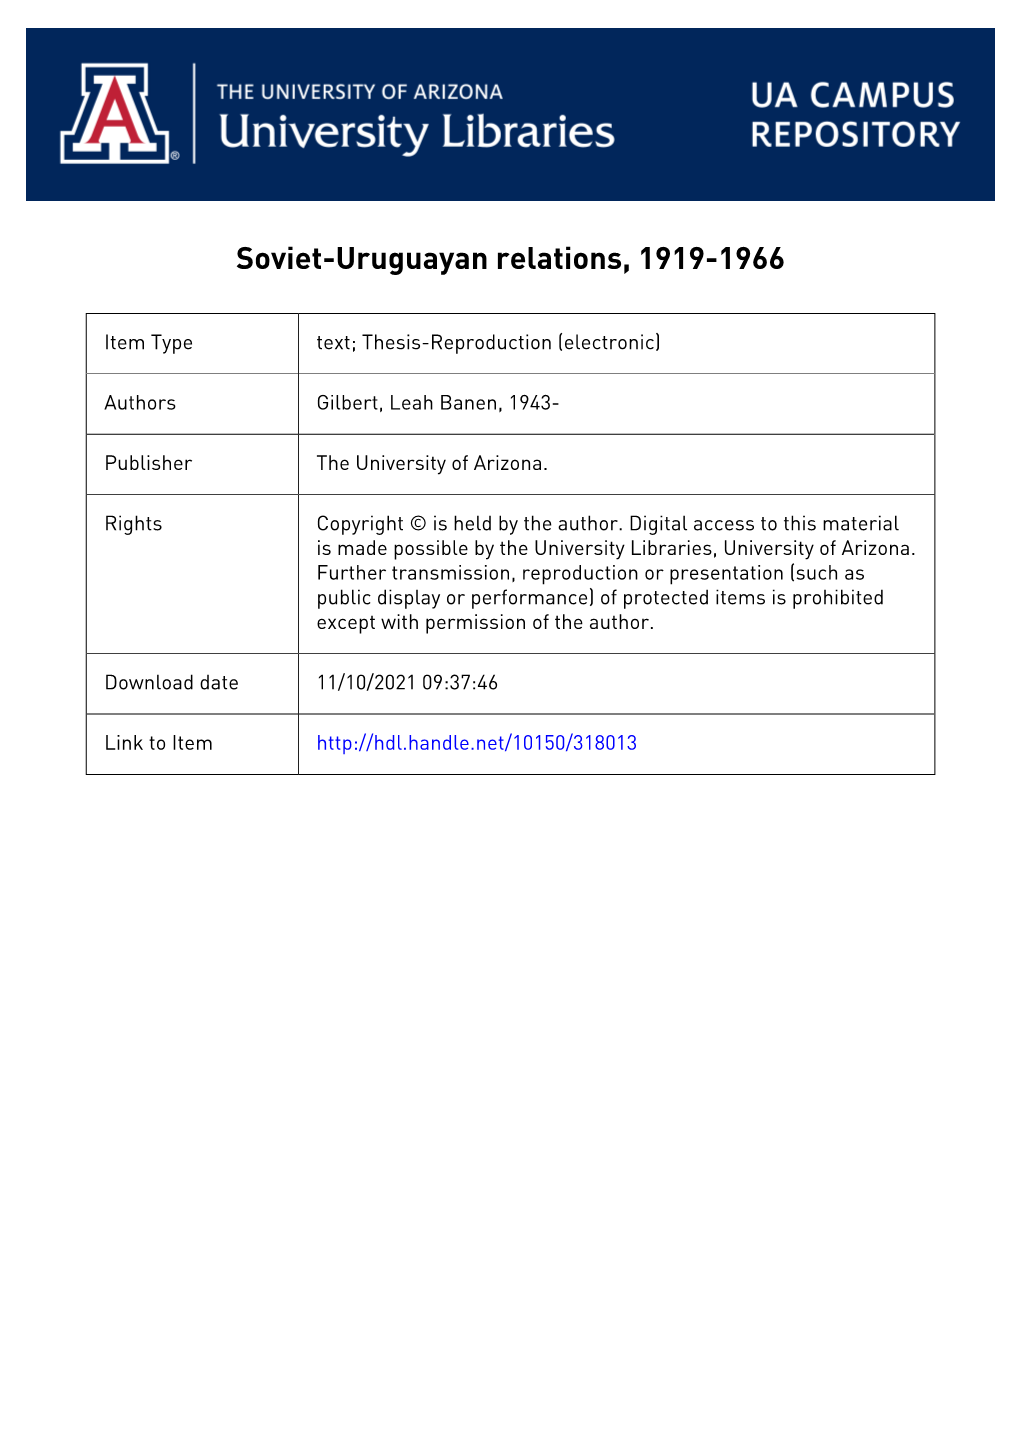 SOVIET-URUGUAYAN RELATIONS 1919-1966 by Leah Banen